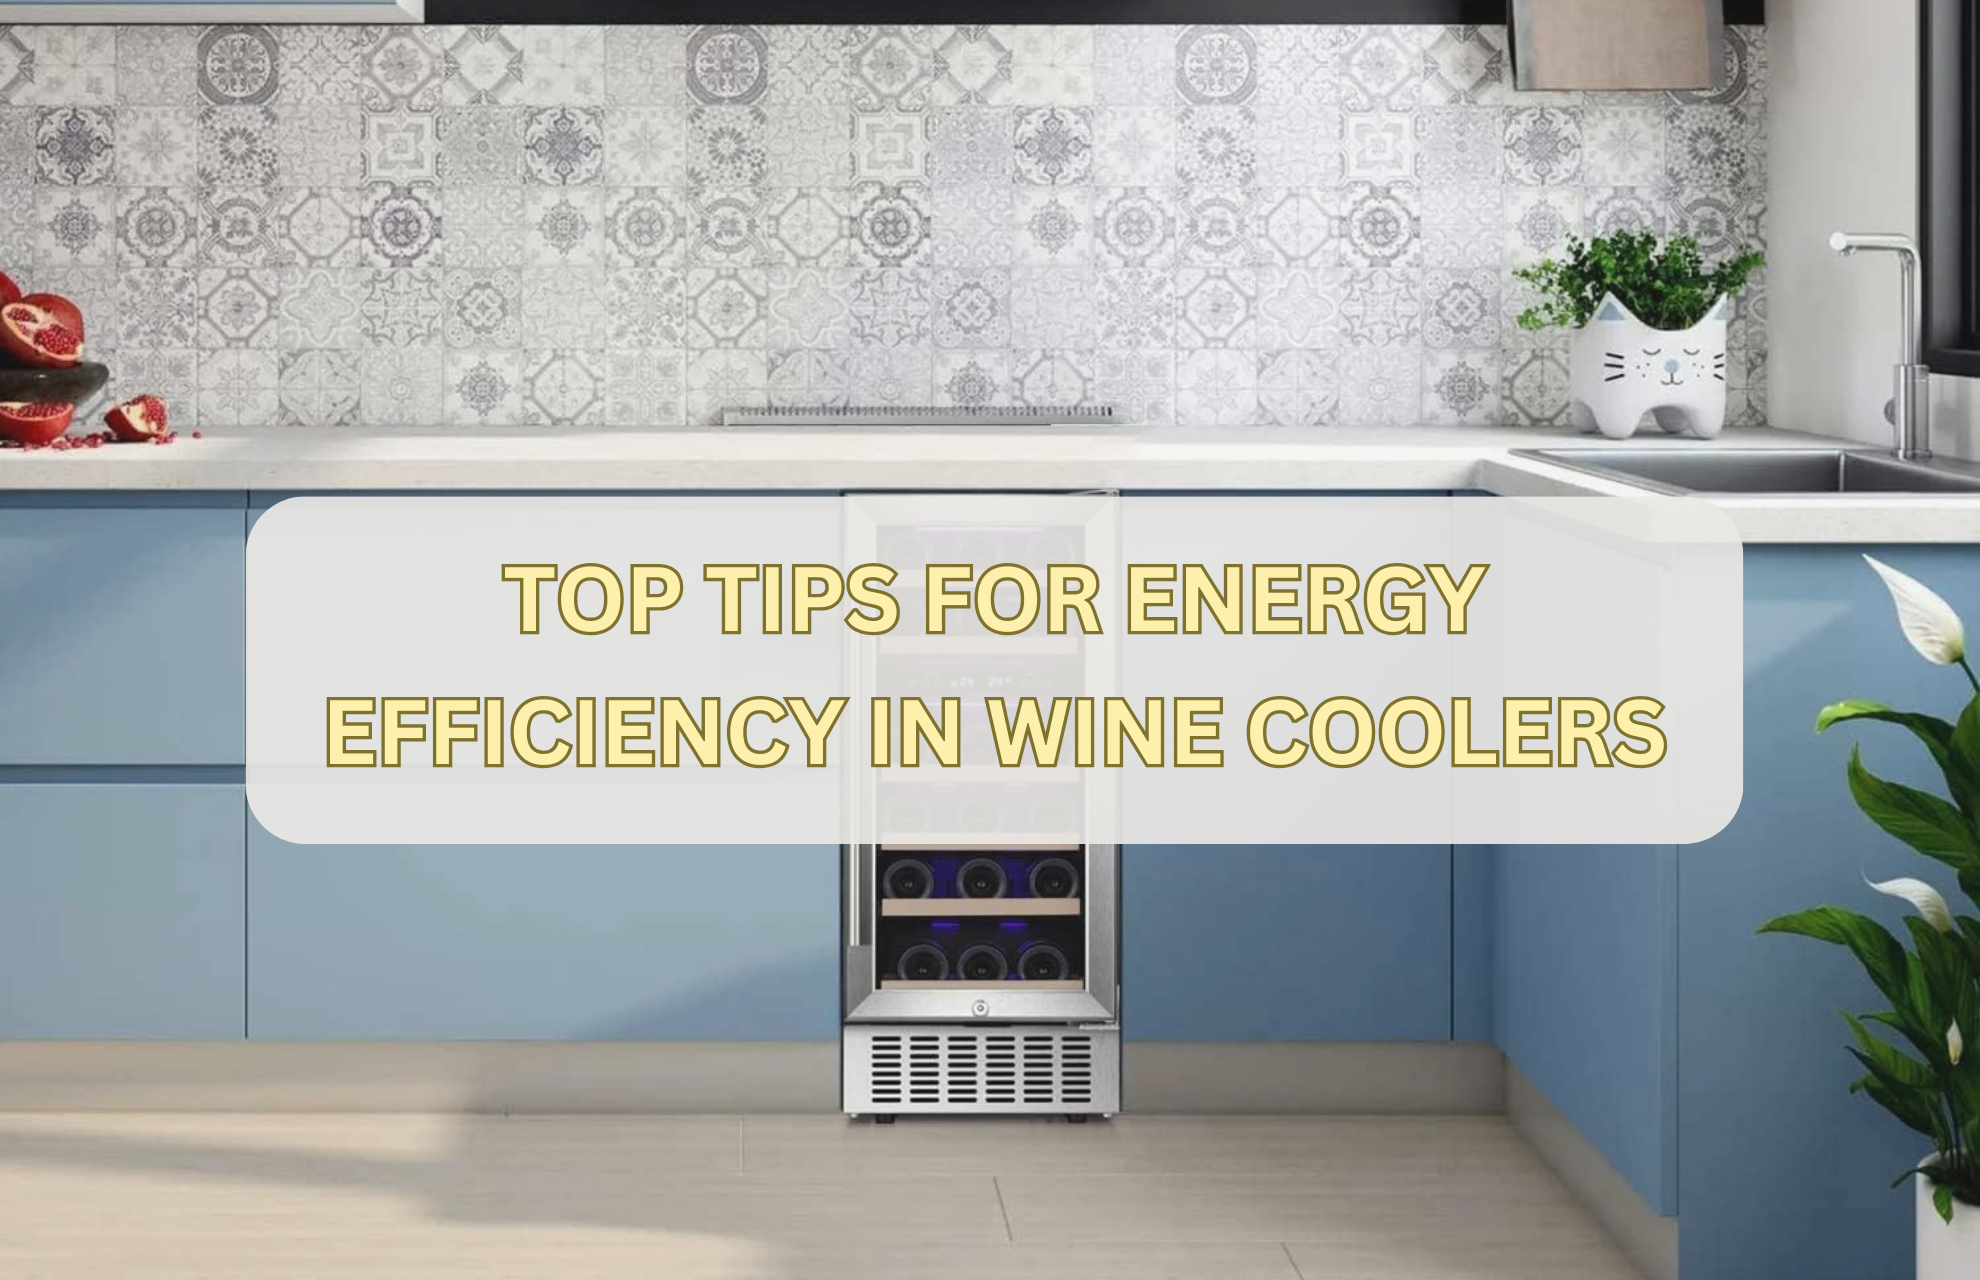 TOP TIPS FOR ENERGY EFFICIENCY IN WINE COOLERS